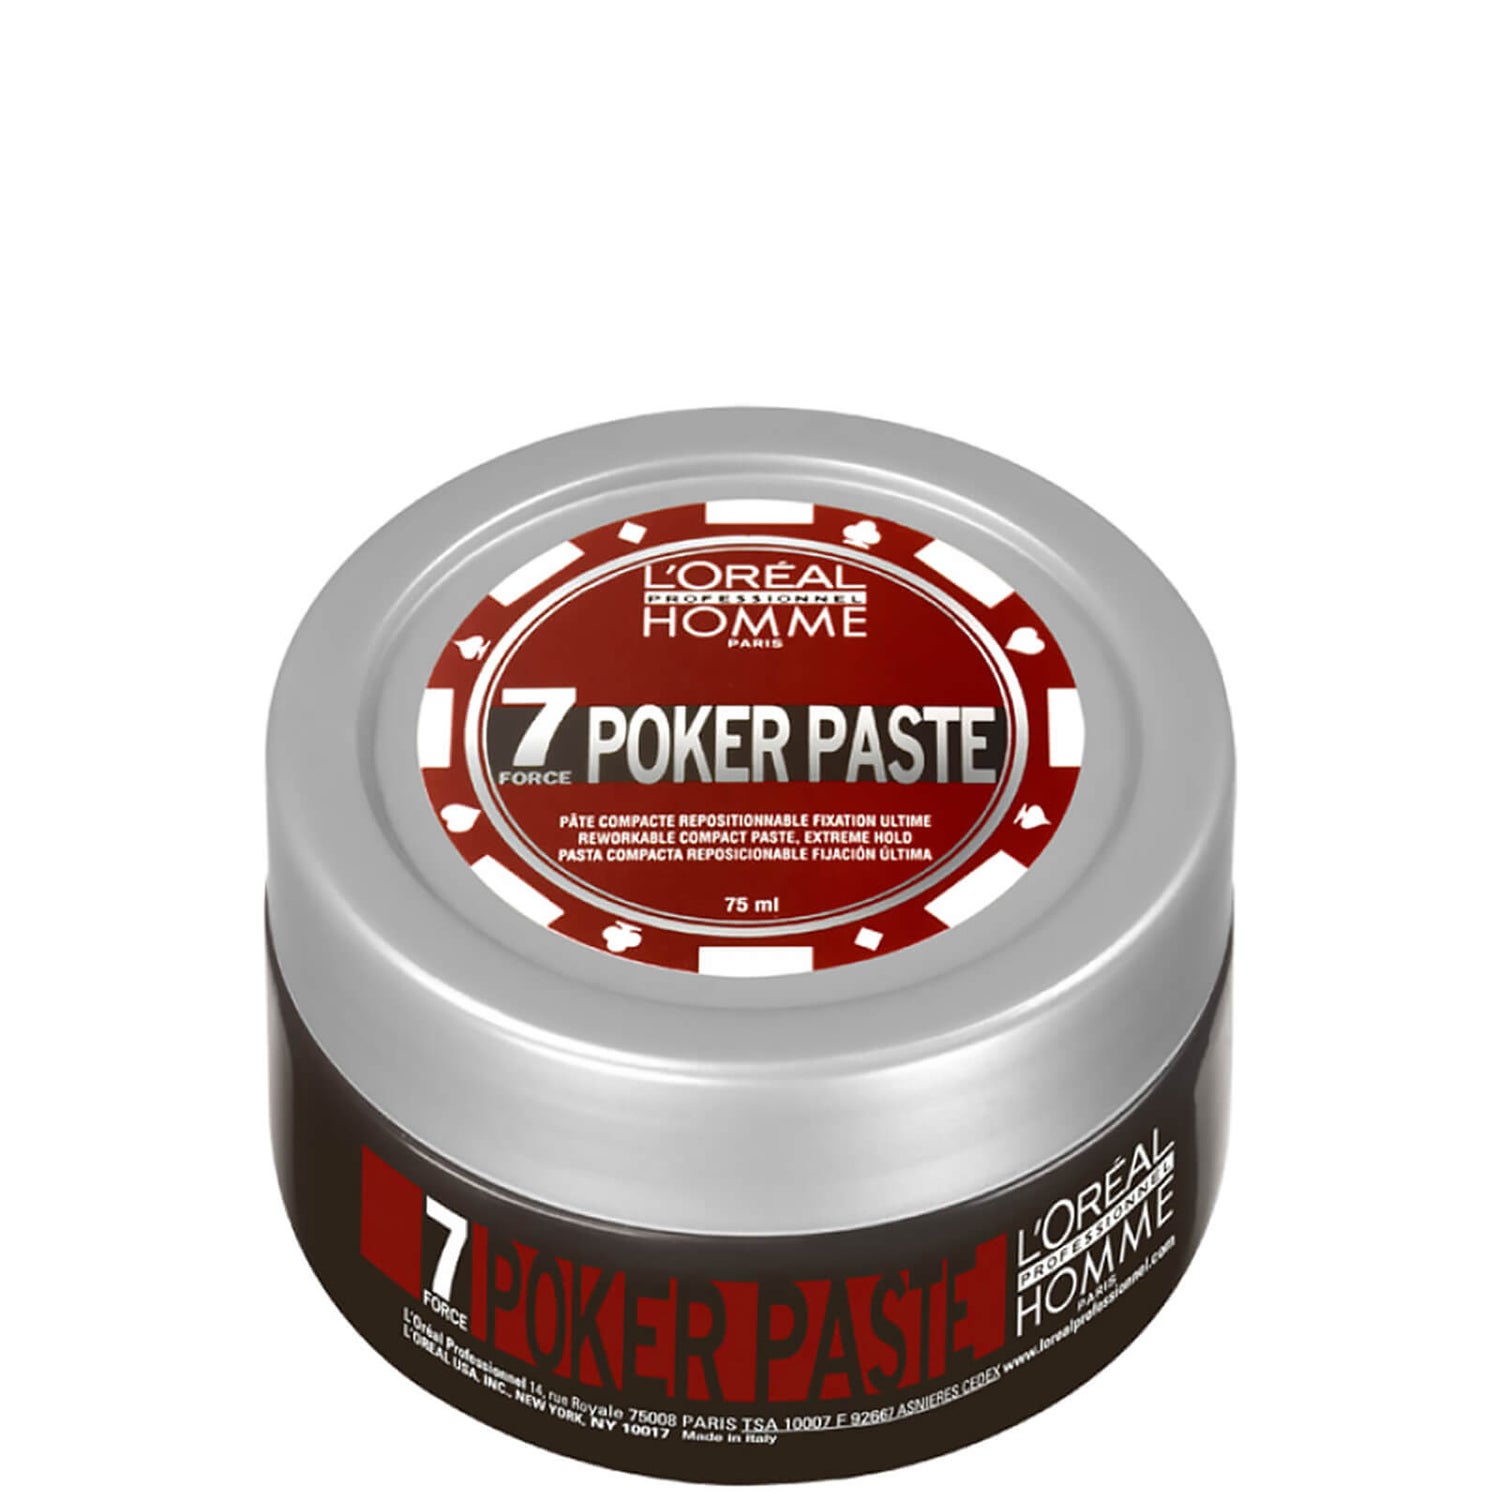 L'Oreal Professional Homme Poker Paste -muotoilugeeli (75ml)